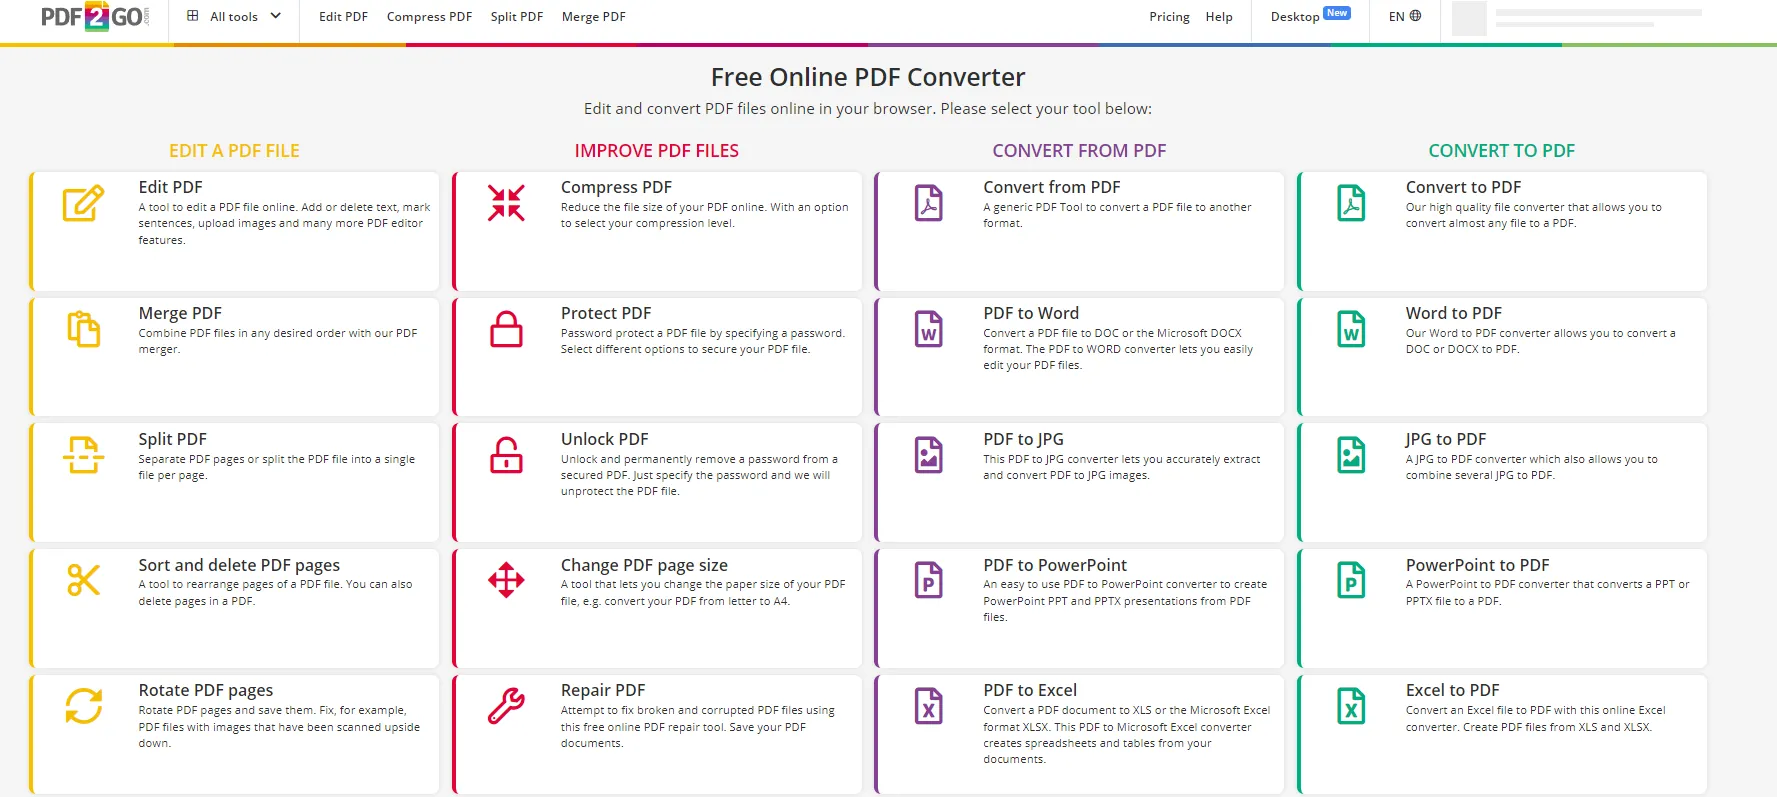 jpg to pdf converter pdf2go interface